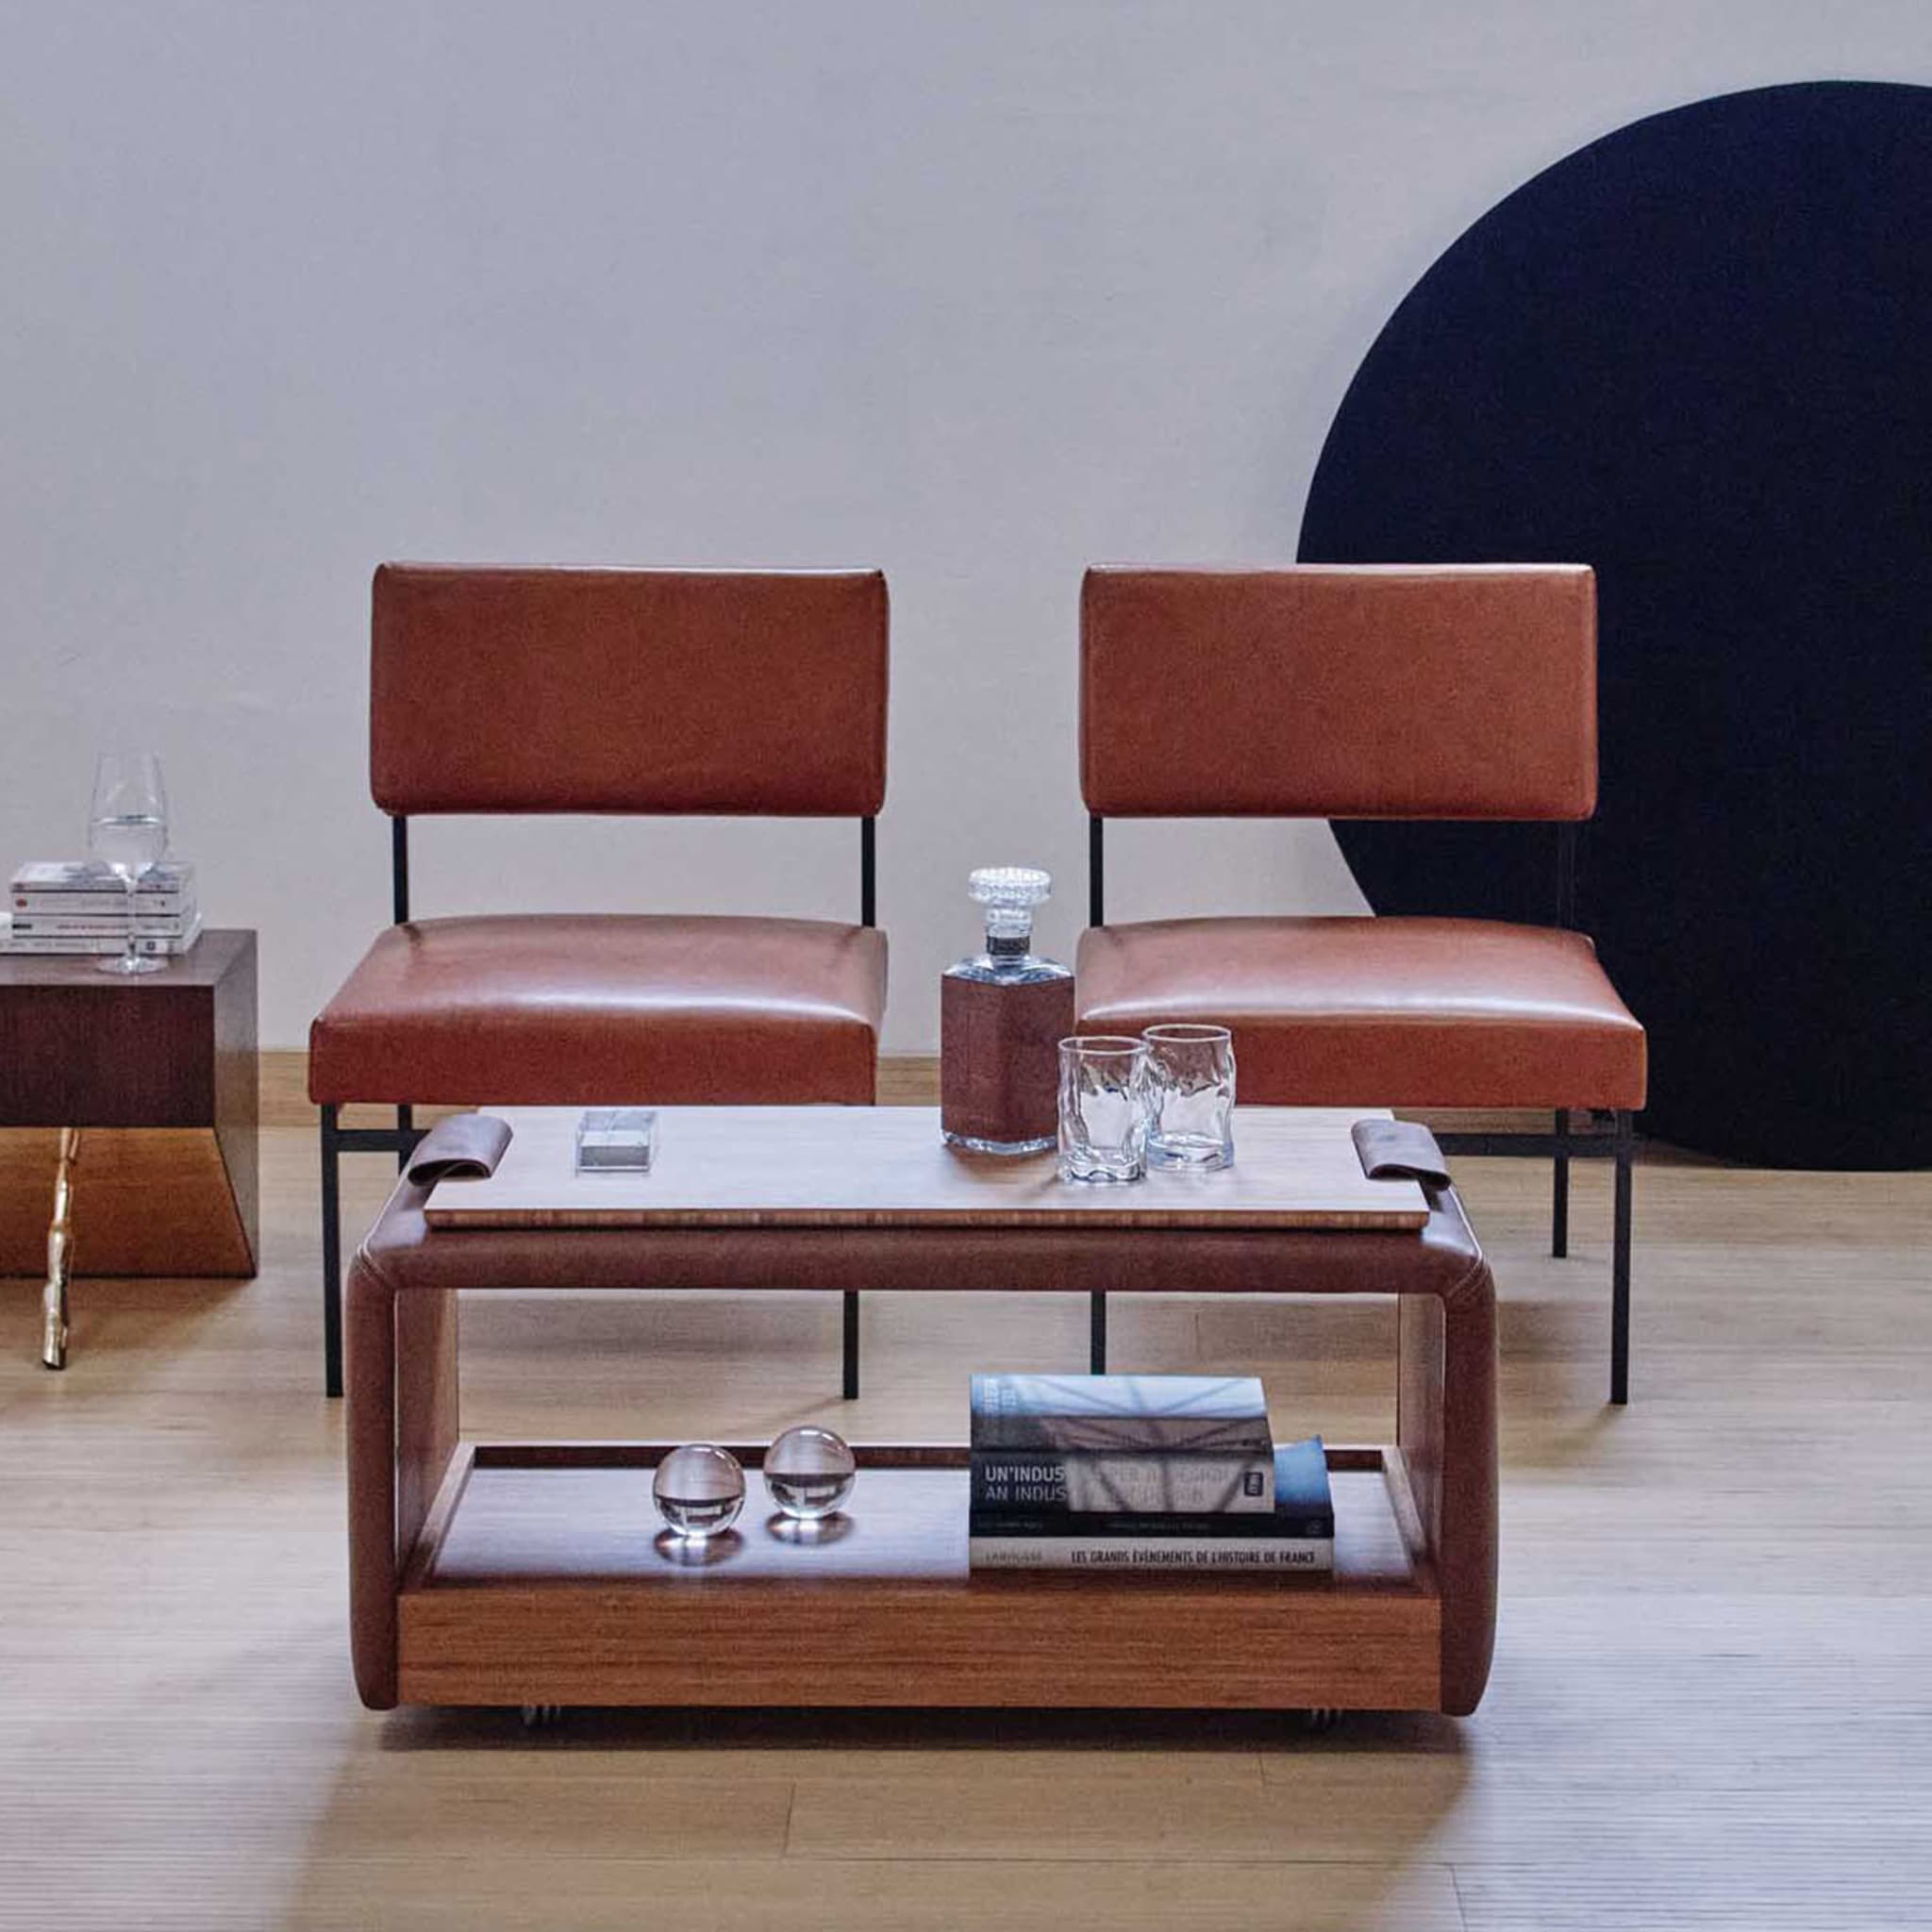 Aurea Bio Brown Leather Chair by CtrlZak and Davide Barzaghi  - Alternative view 1